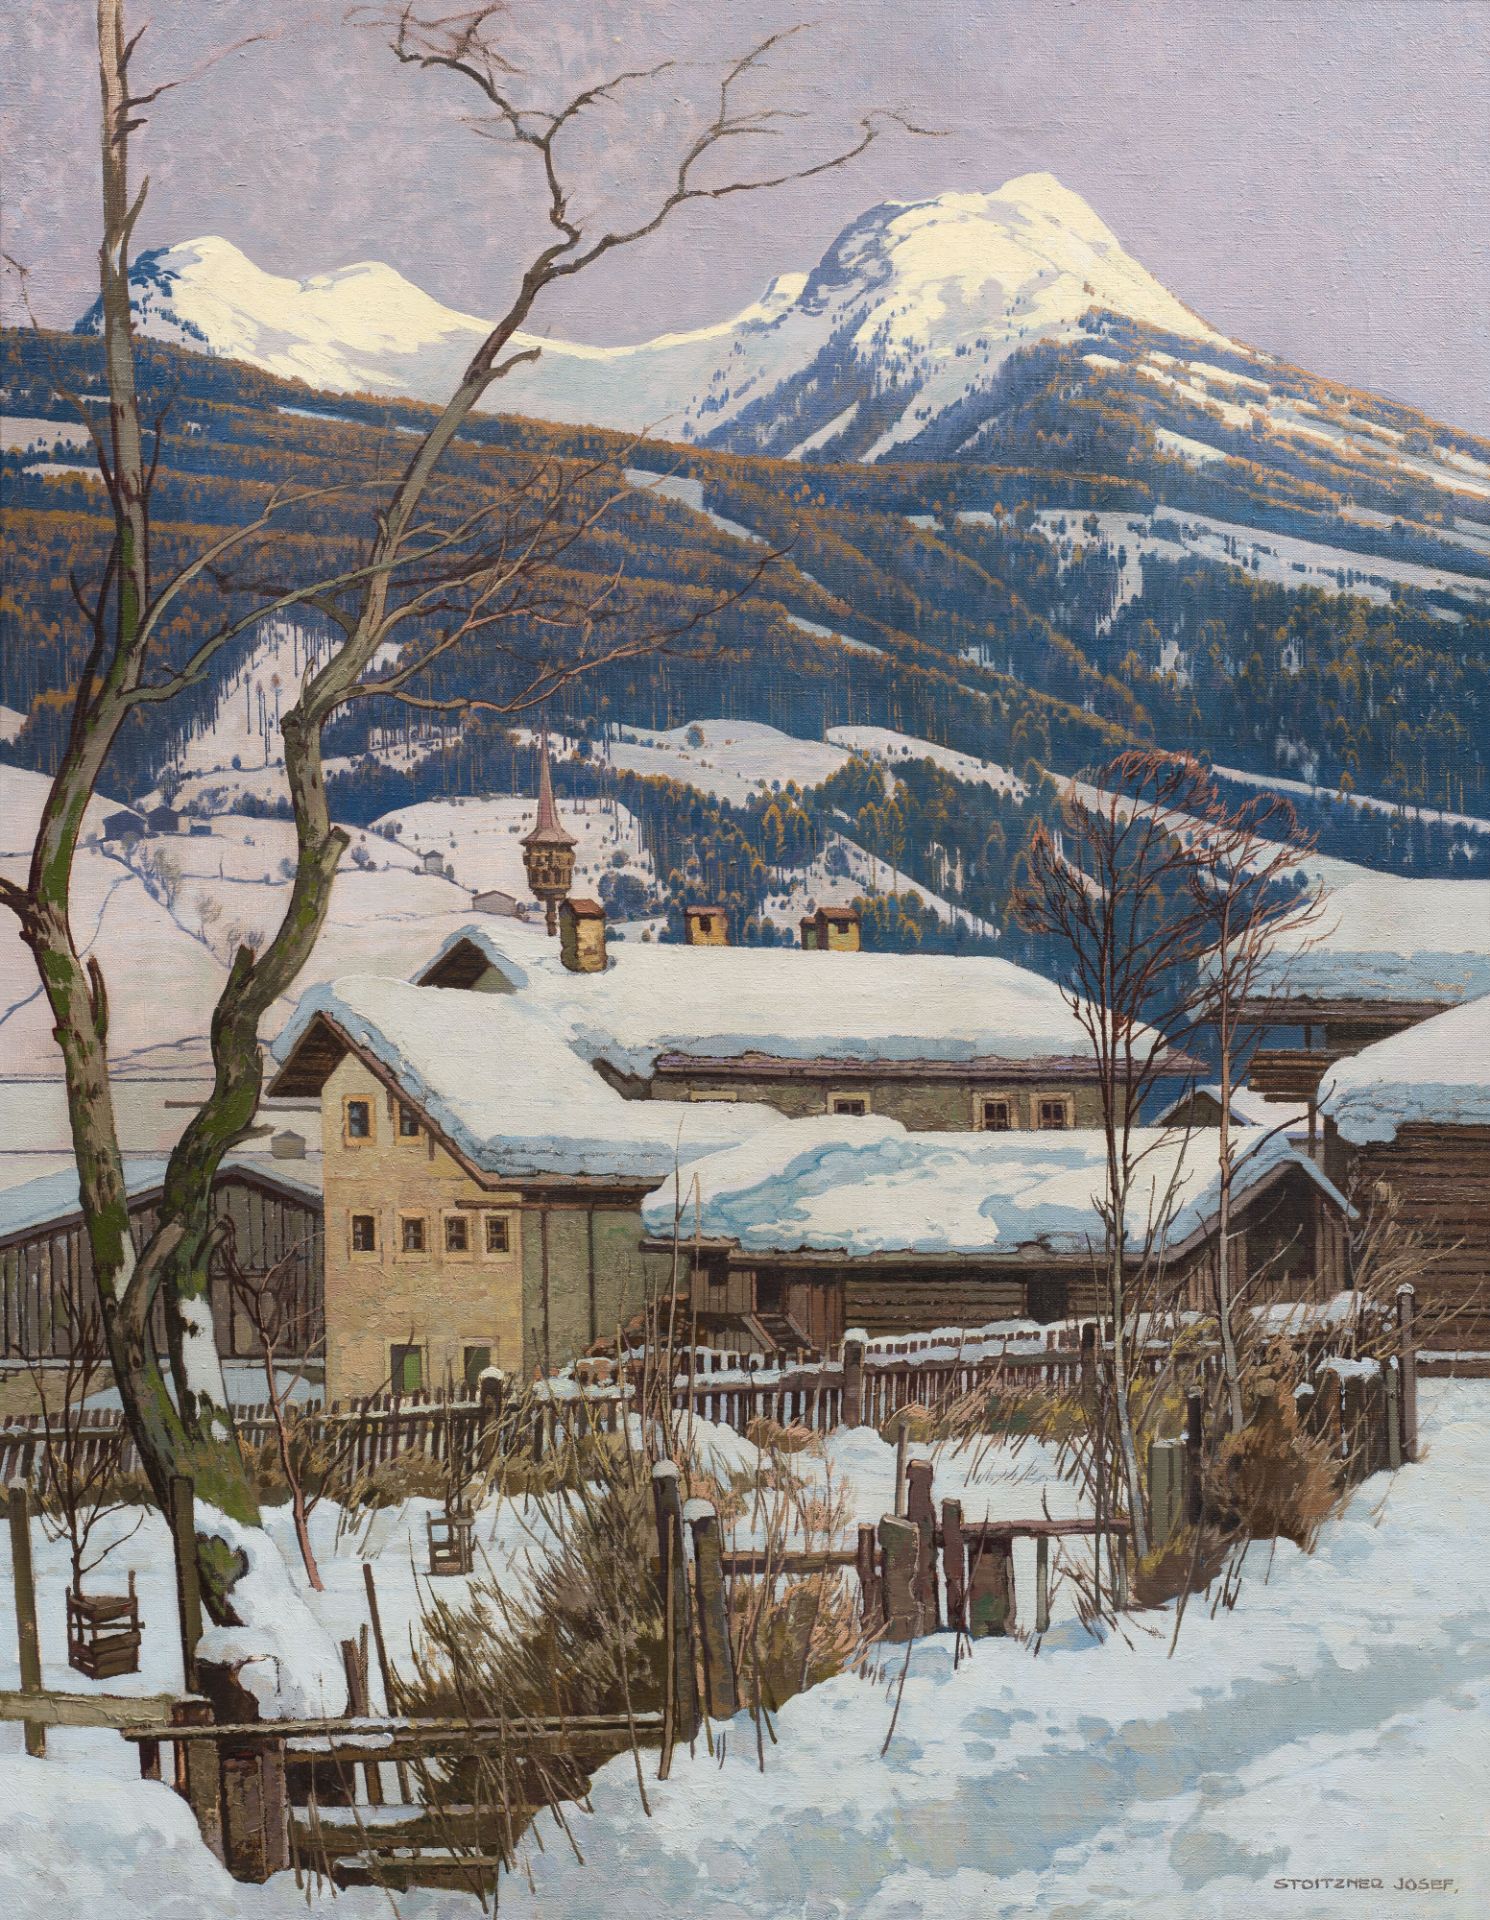 Josef StoitznerTanzlehen in Brambergc. 1935oil on canvas; framed116 x 90 cmsigned on the lower